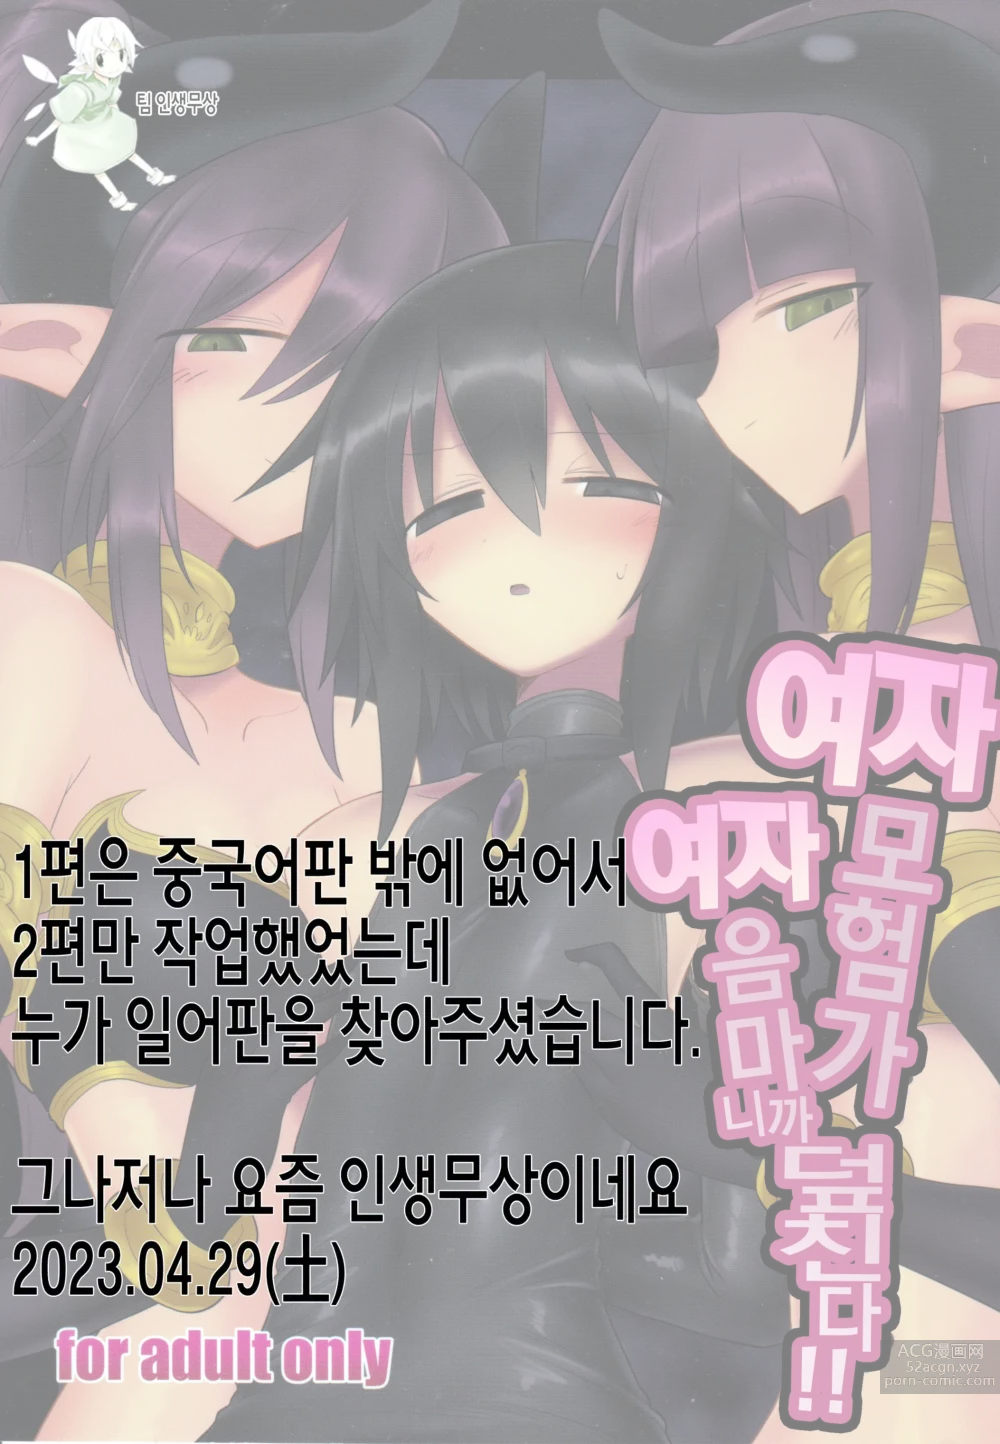 Sex Mit Akemi Inma - Onna Inma dakara Onna Boukensha Osou ne!! | ì—¬ìž ìŒë§ˆë‹ˆê¹Œ ì—¬ìž ëª¨í—˜ìž ë®ì¹œë‹¤!! - Korean  Hentai Manga (Page 31)